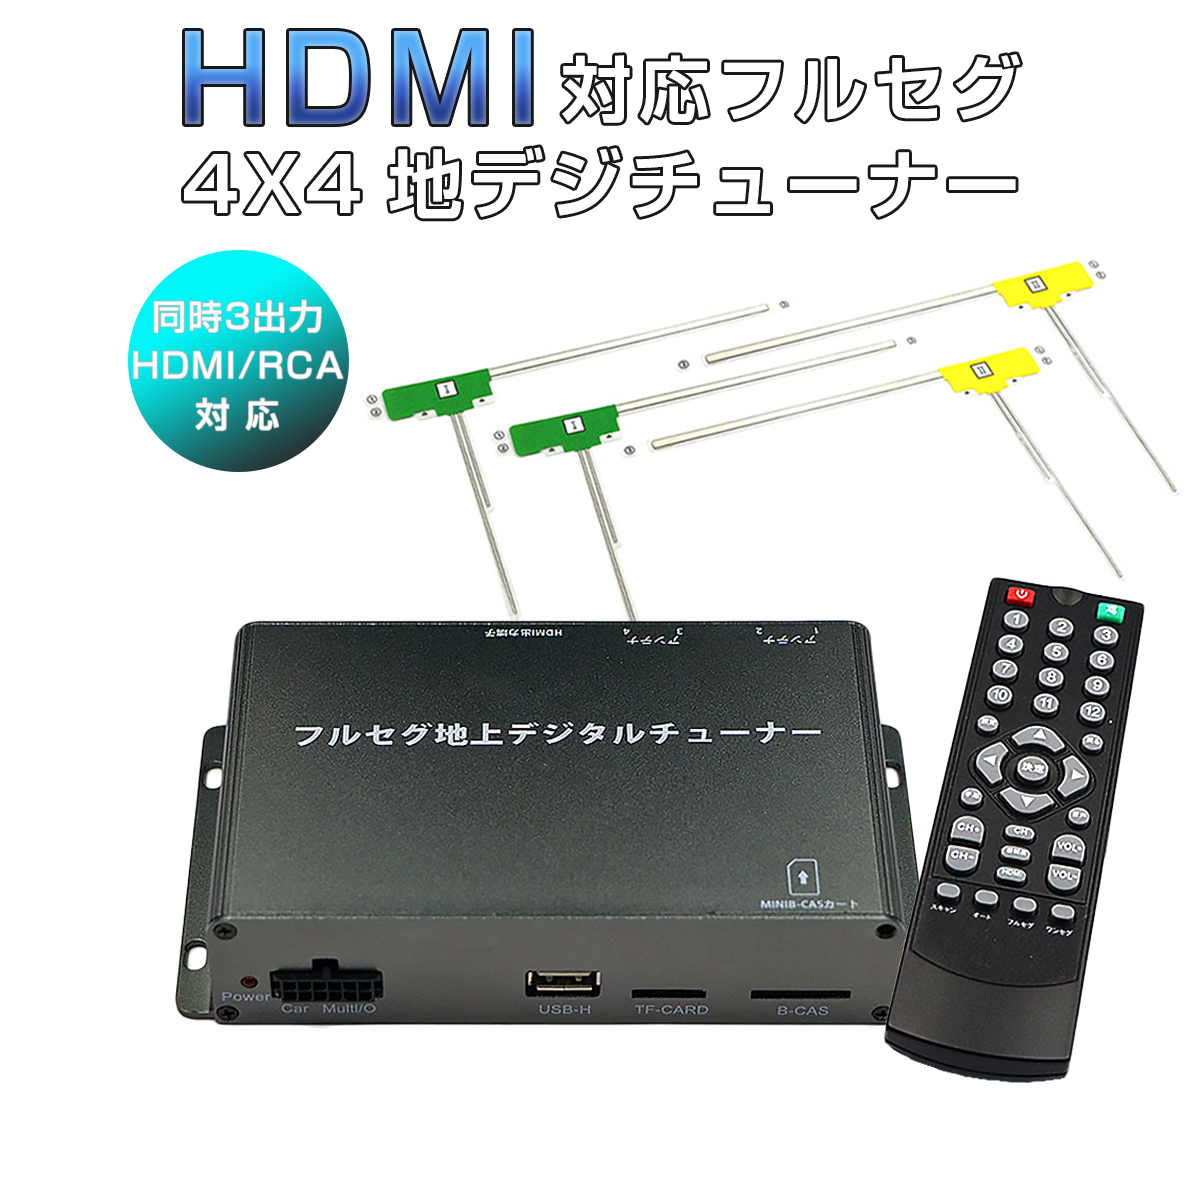 NISSAN用の非純正品 ティーノ 地デジチューナー カーナビ ワンセグ フルセグ HDMI 4x4 高性能 4チューナー 4アンテナ 高画質 自動切換 150km/hまで受信 古い車載TVやカーナビにも使える 12V/24V フィルムアンテナ miniB-CASカード付き 6ヶ月保証